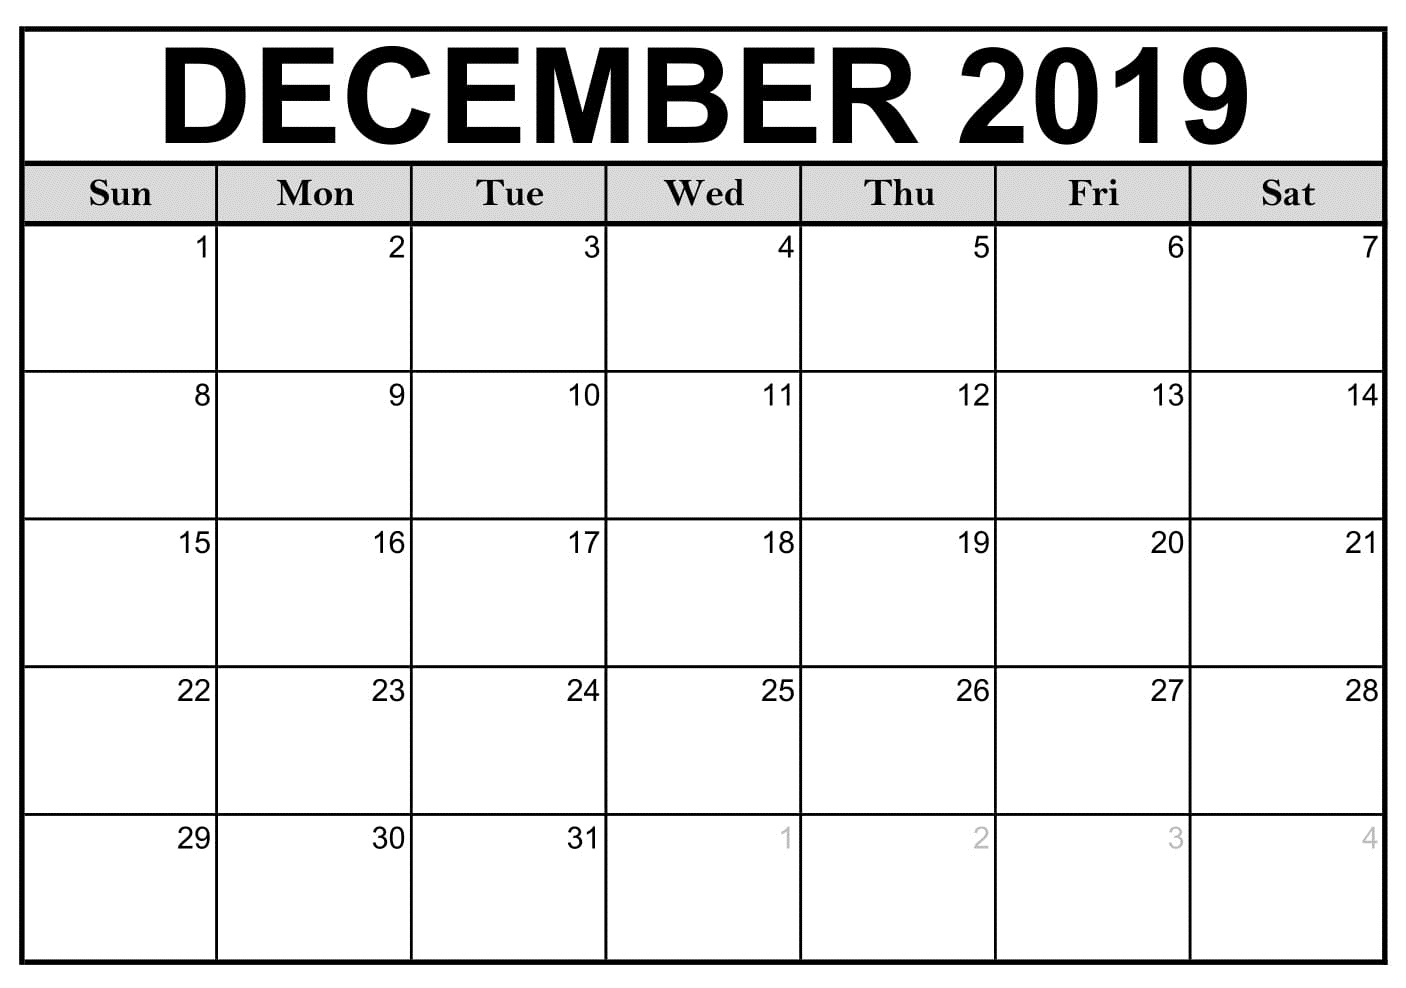 December 2019 Monthly Calendar